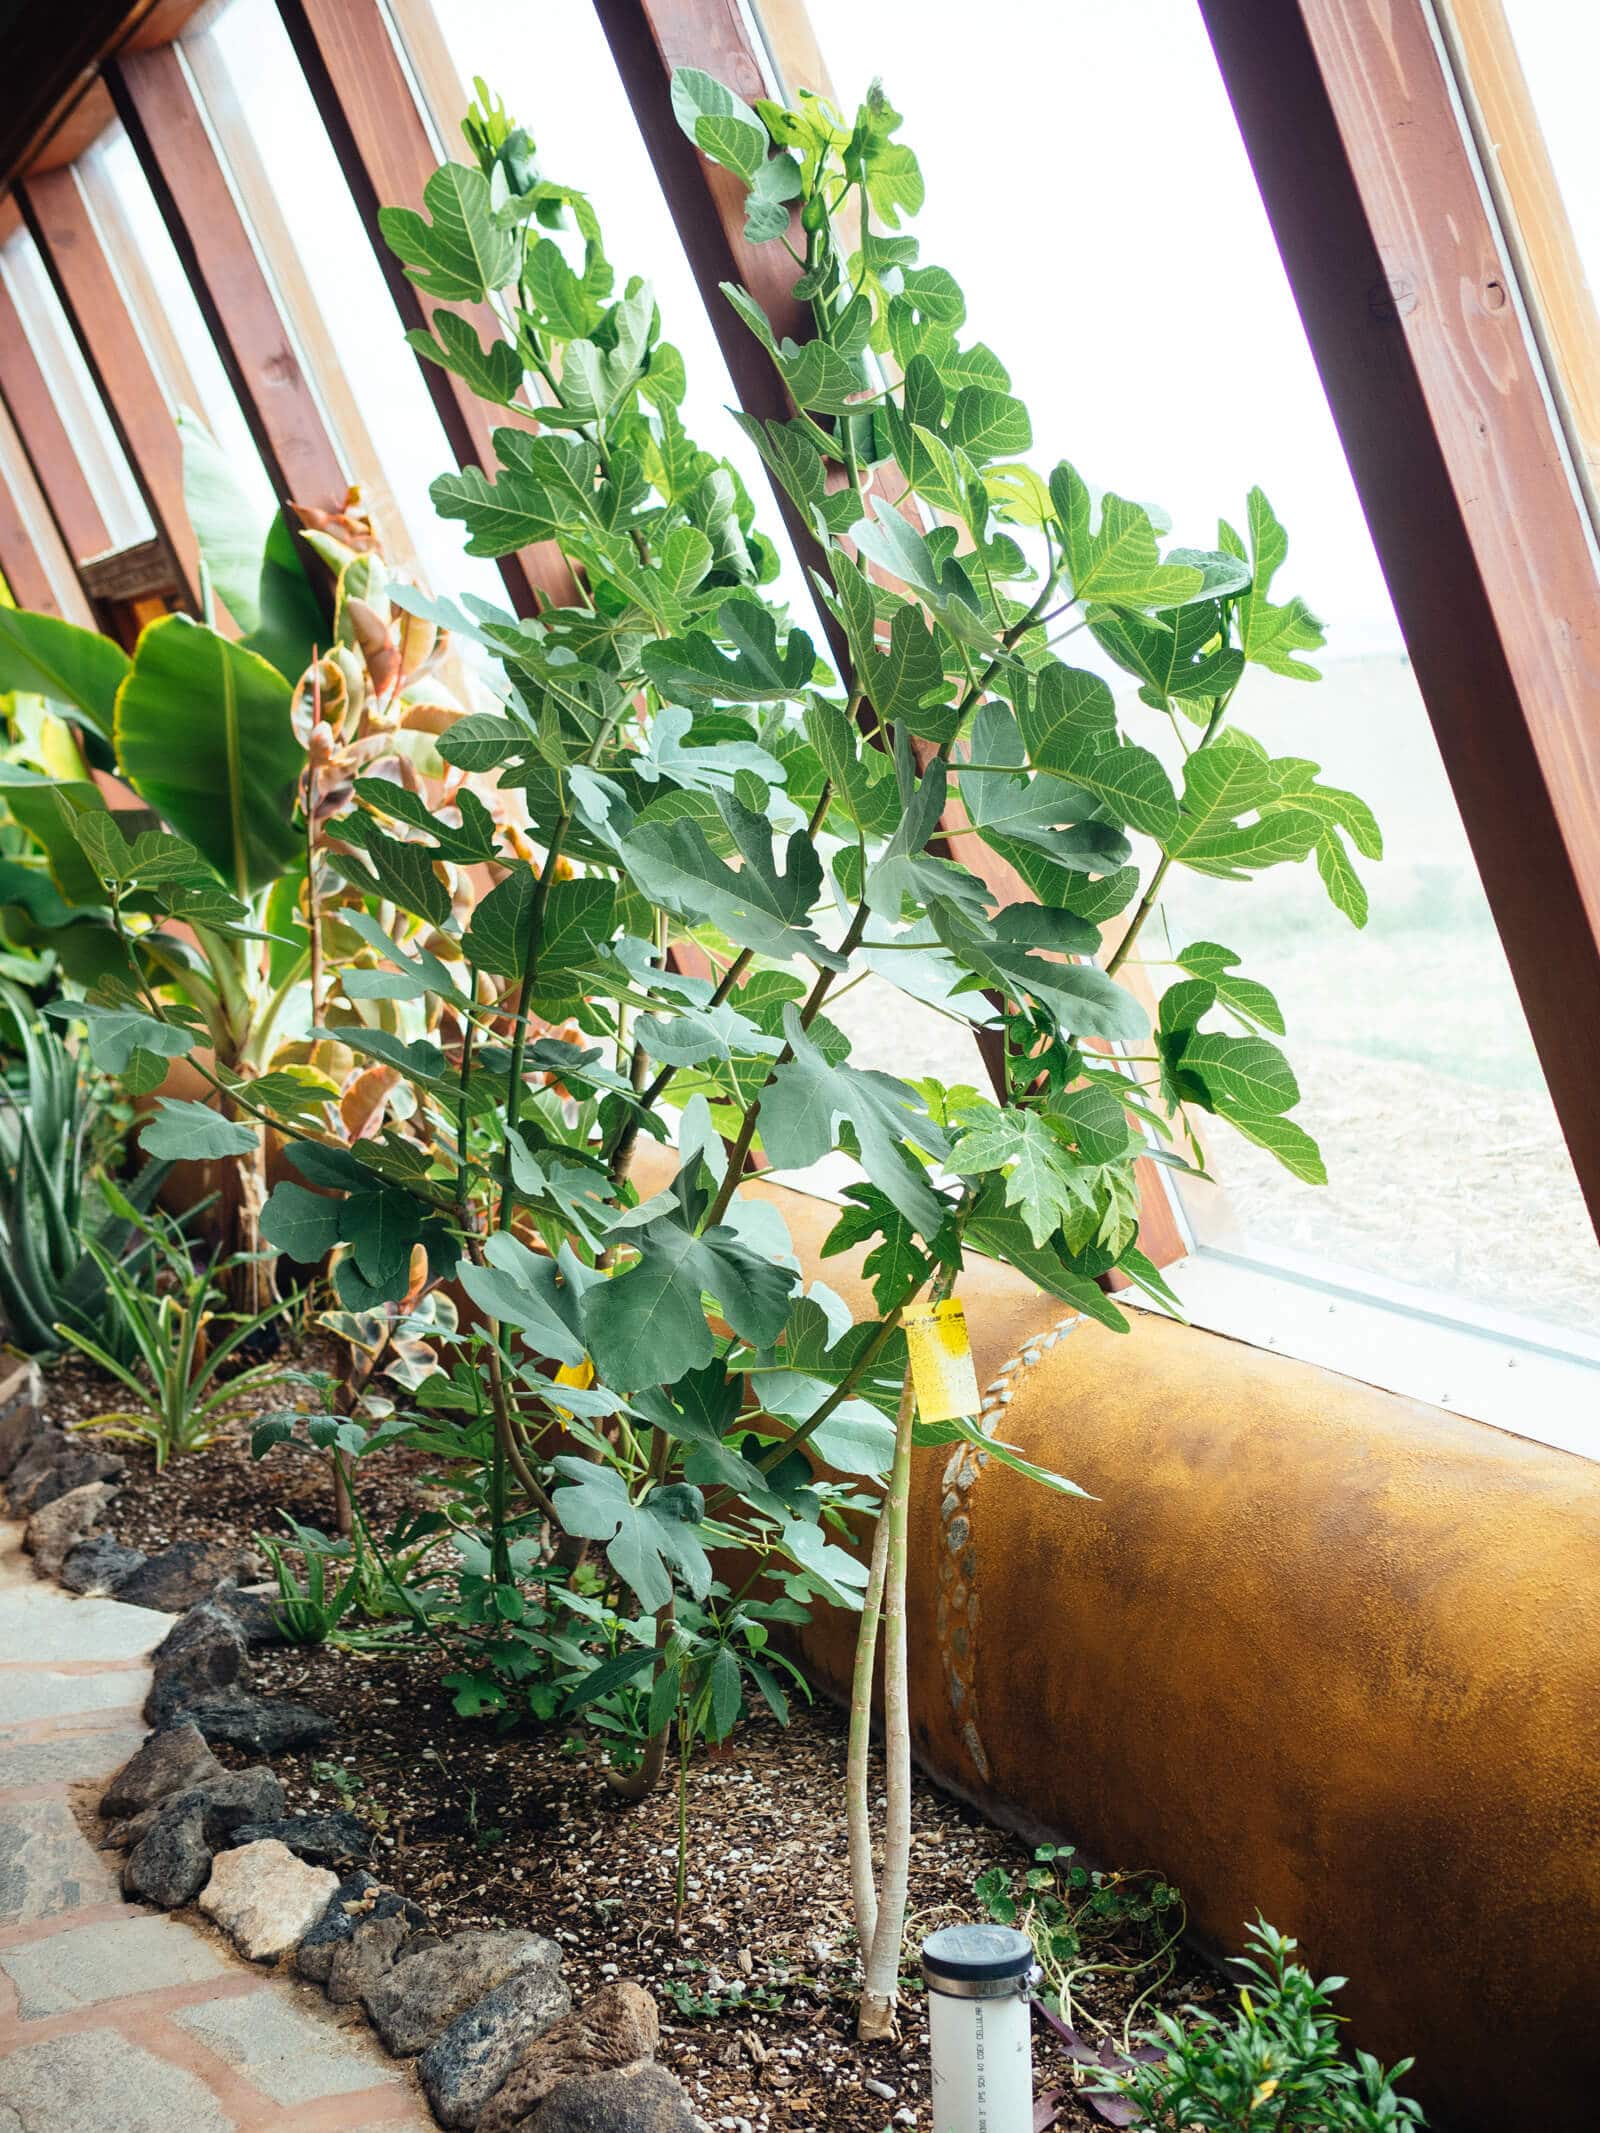 Growing figs in an Earthship greenhouse